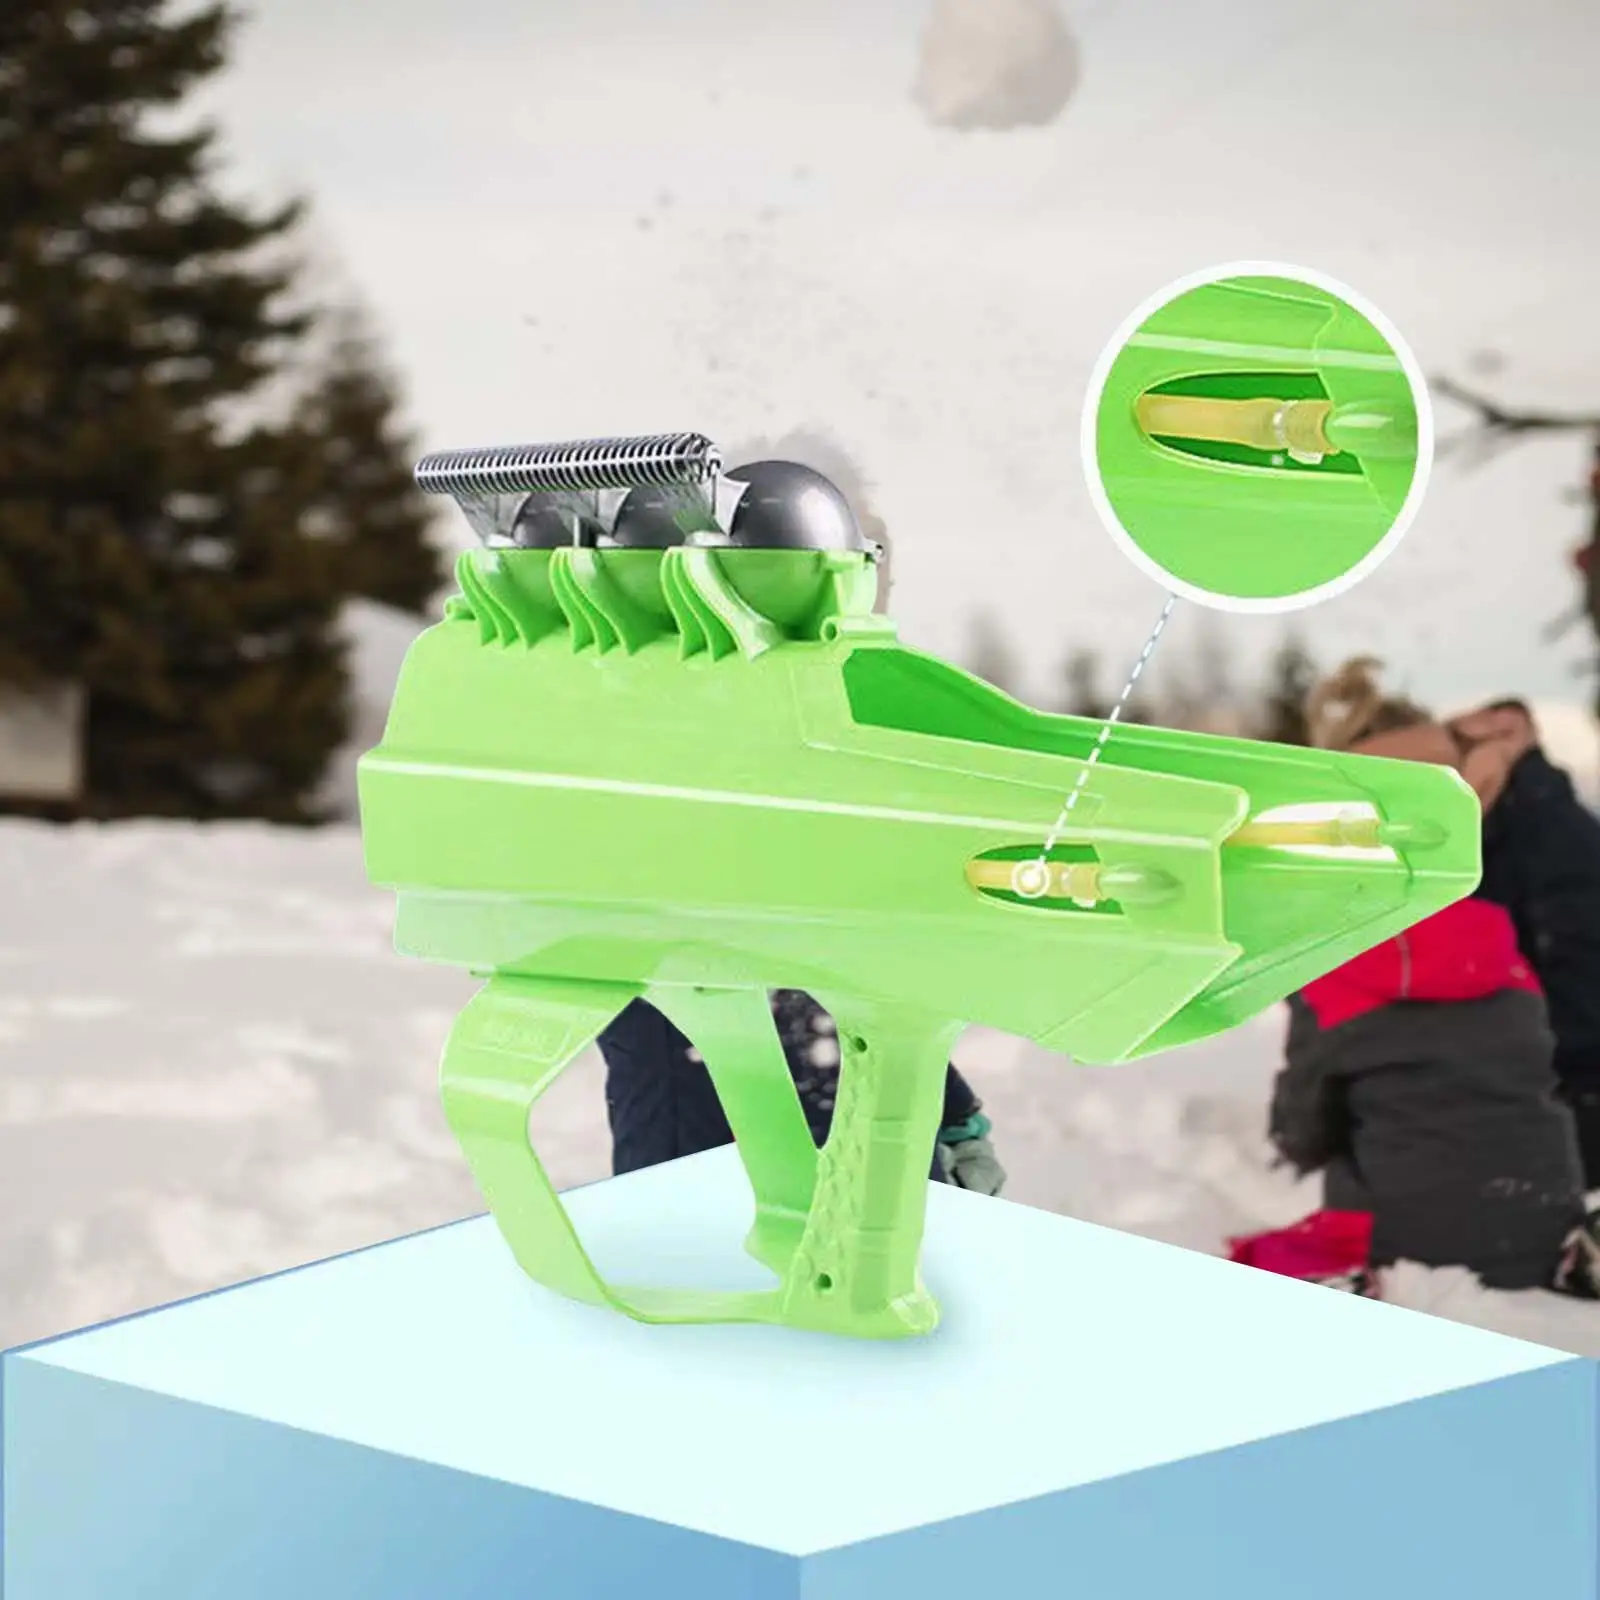 Fun Snowball Launcher 8 Years Flexible Play Toys Outdoor Activities Maker Winter